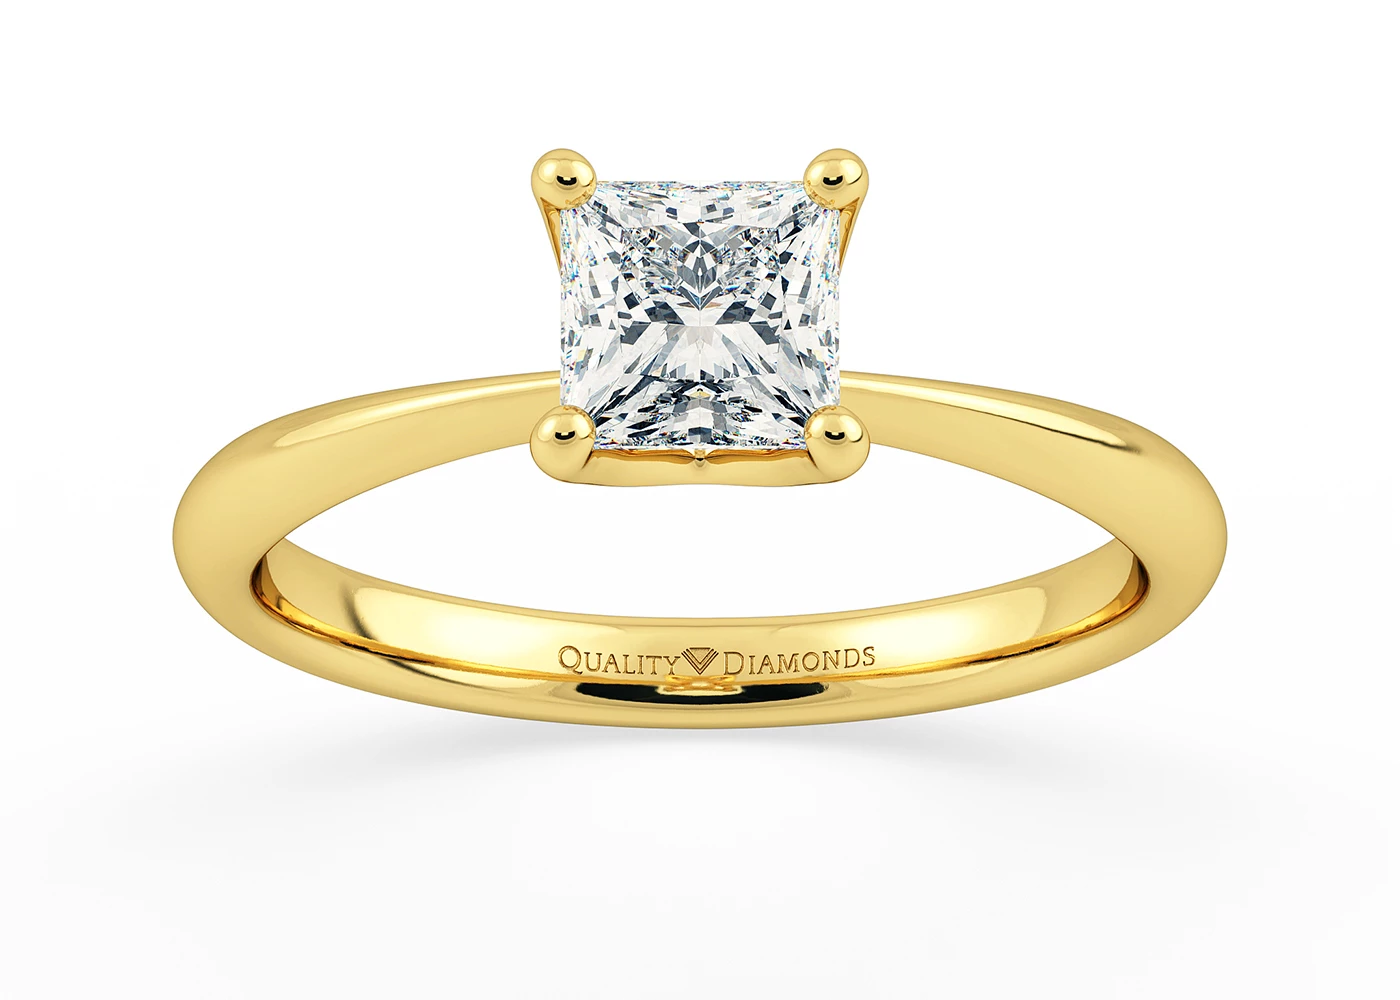 Princess Amorette Diamond Ring in 9K Yellow Gold